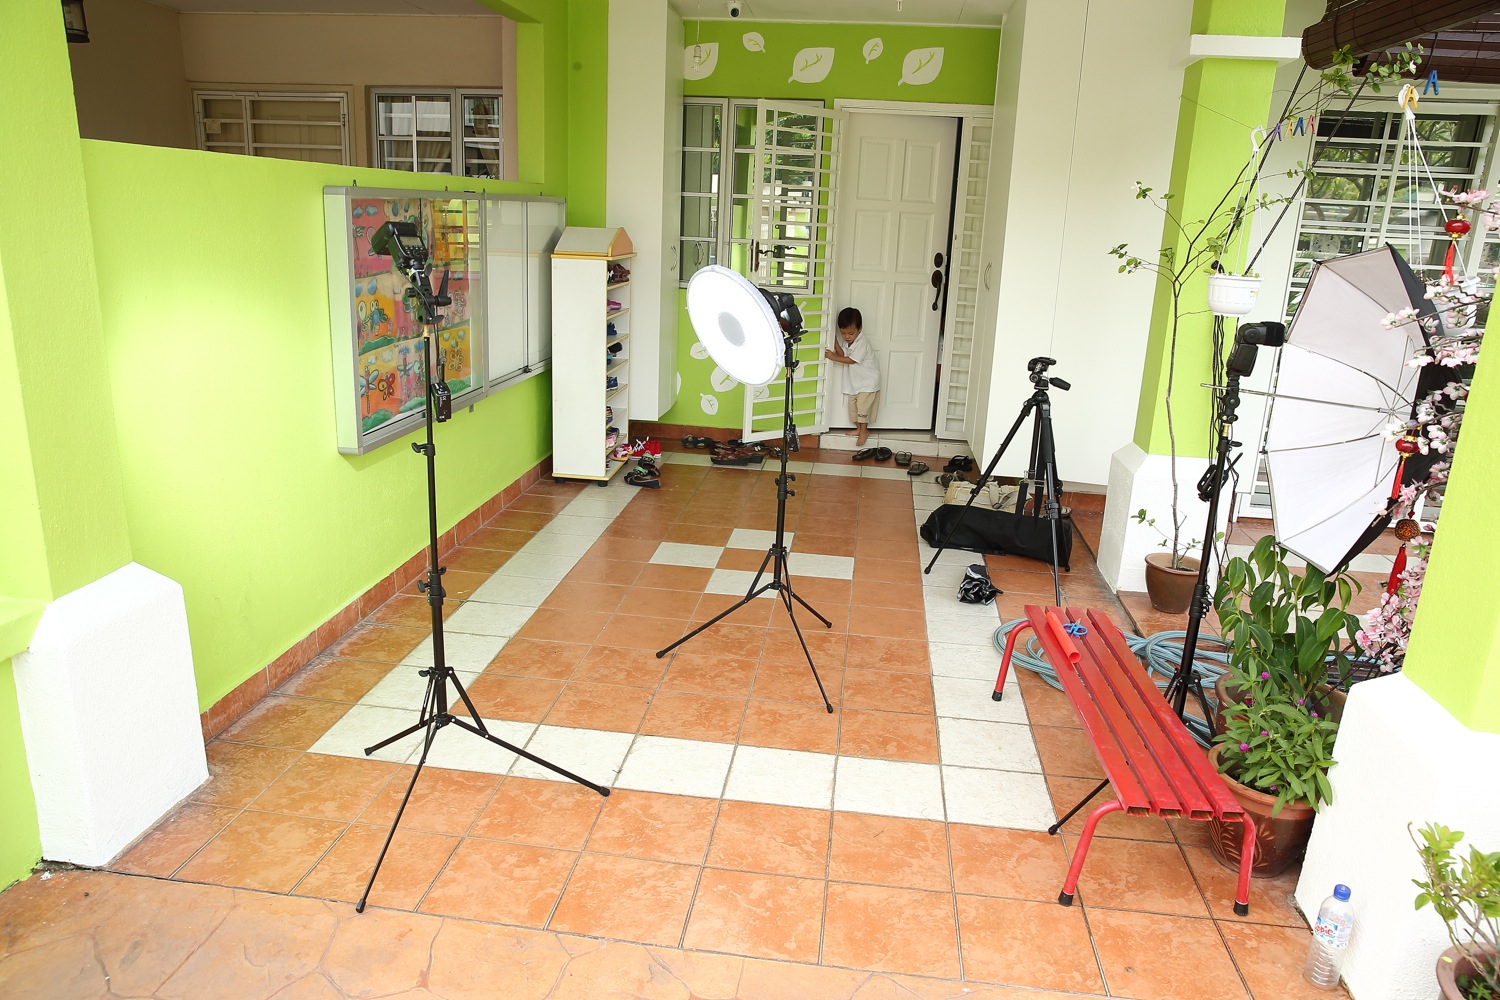 Kindergarten photography services setup